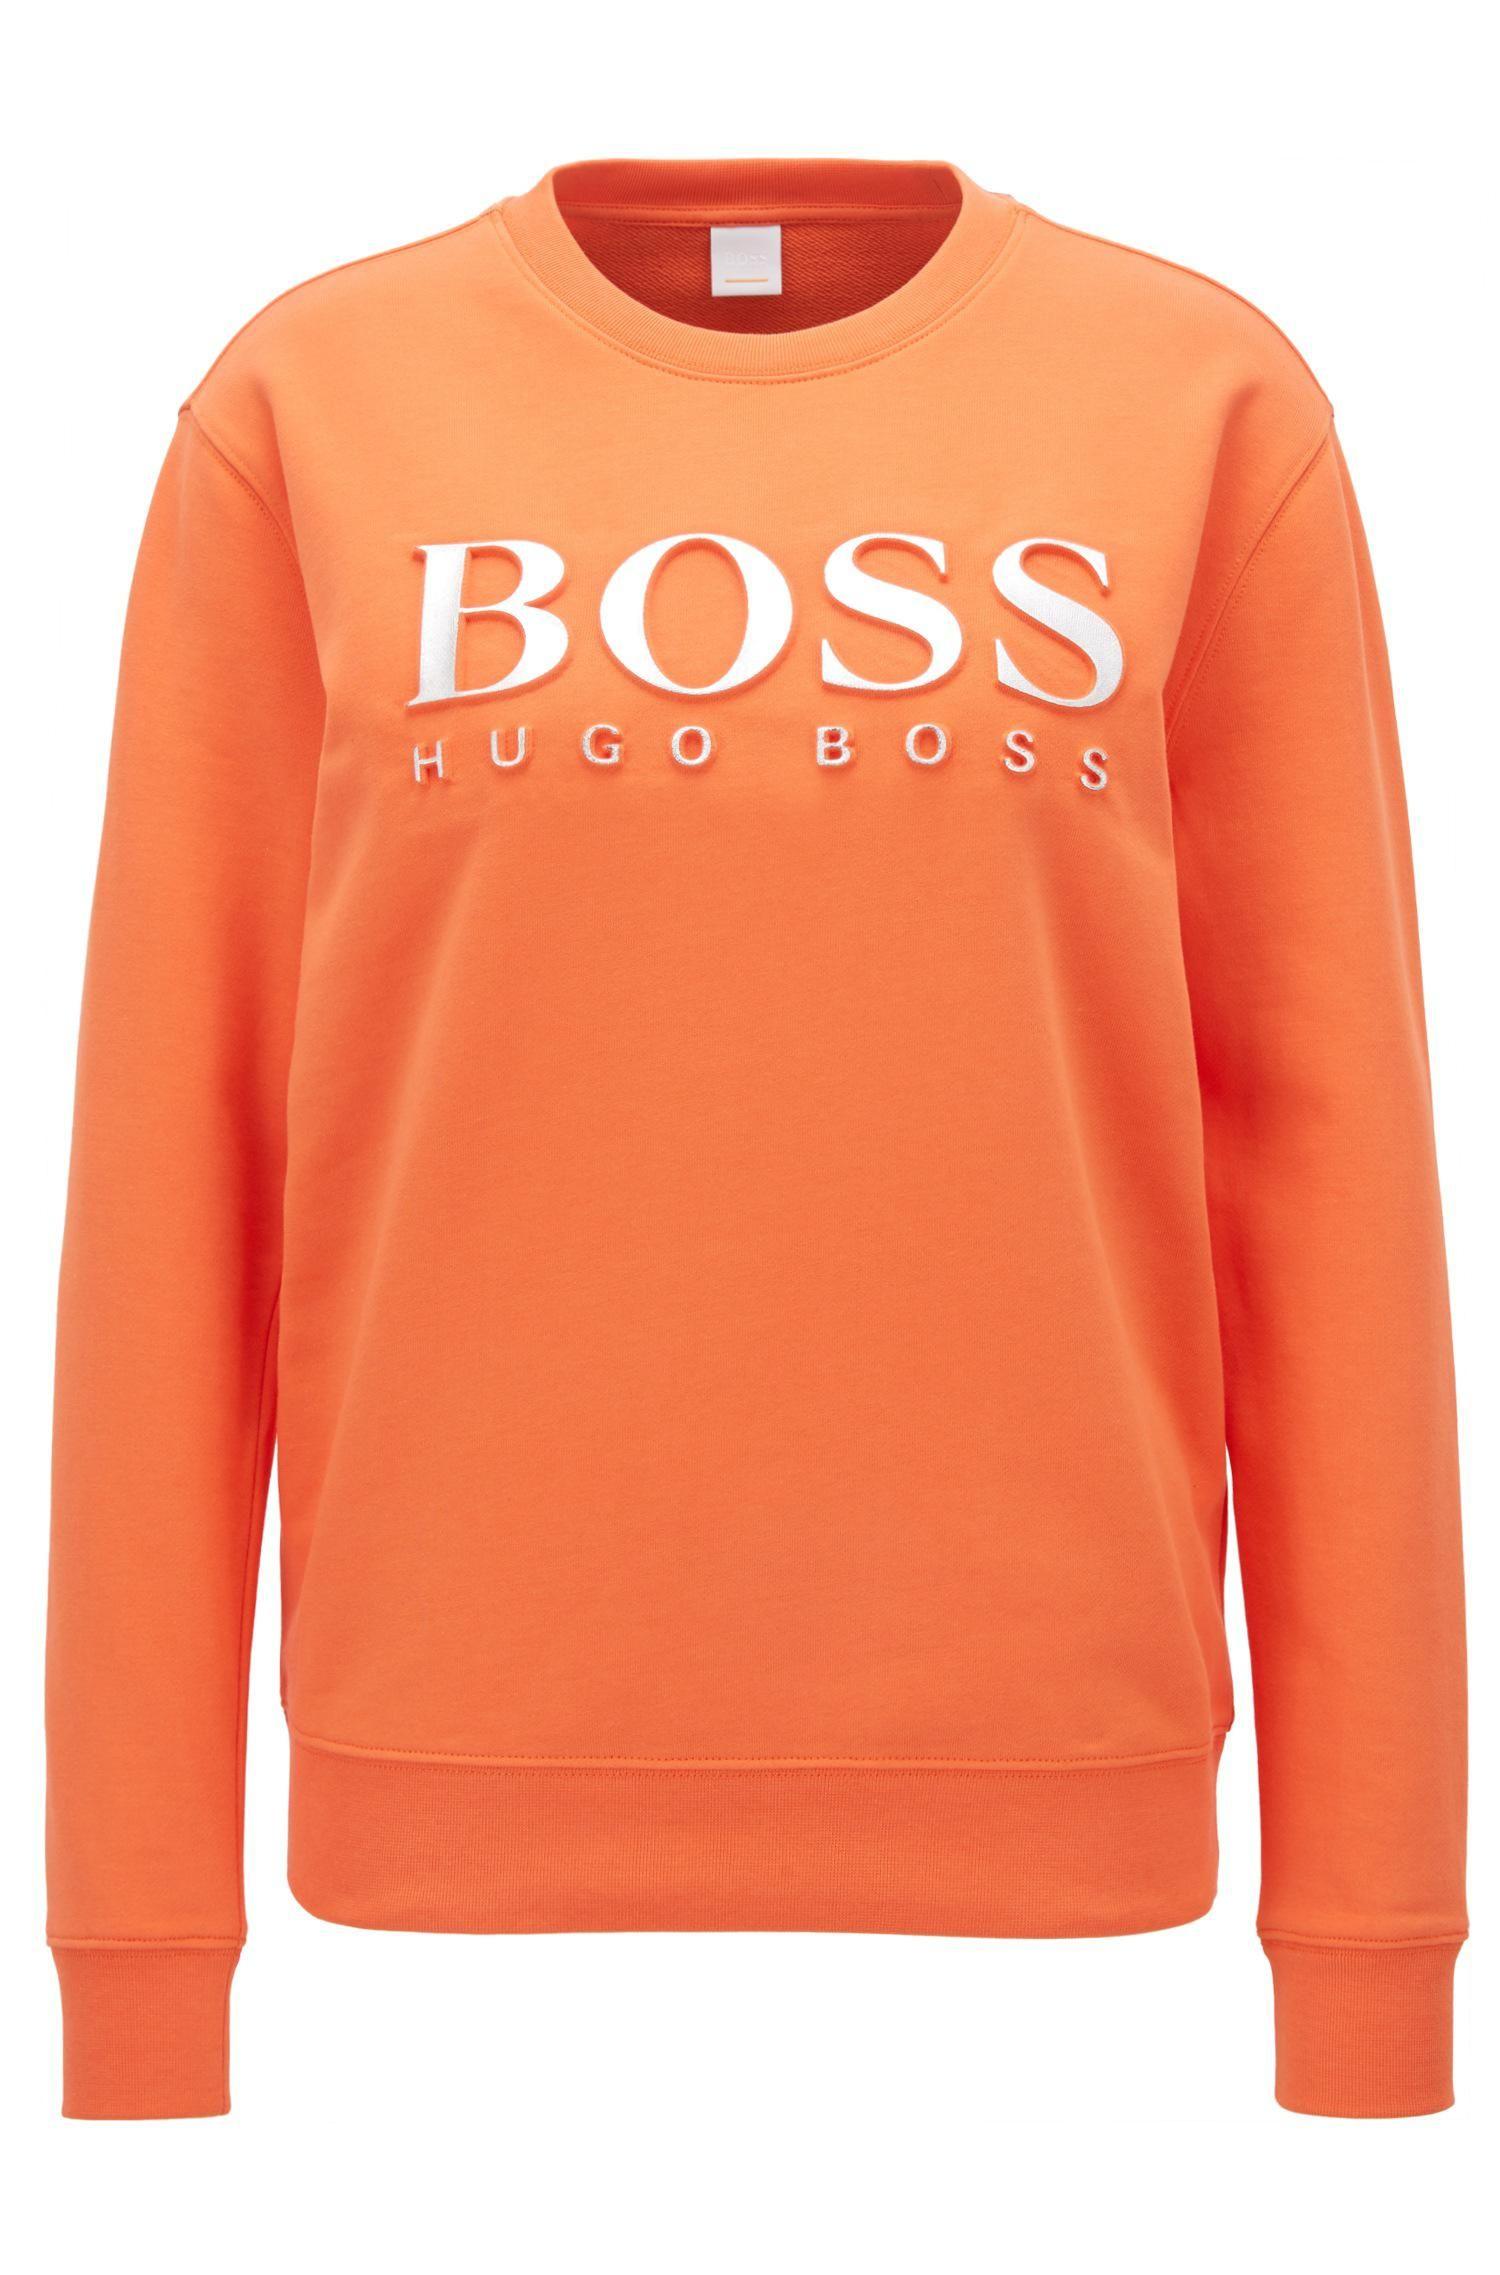 Three Orange Logo - BOSS Cotton Terry Sweatshirt With Three-dimensional Metallic Logo in ...